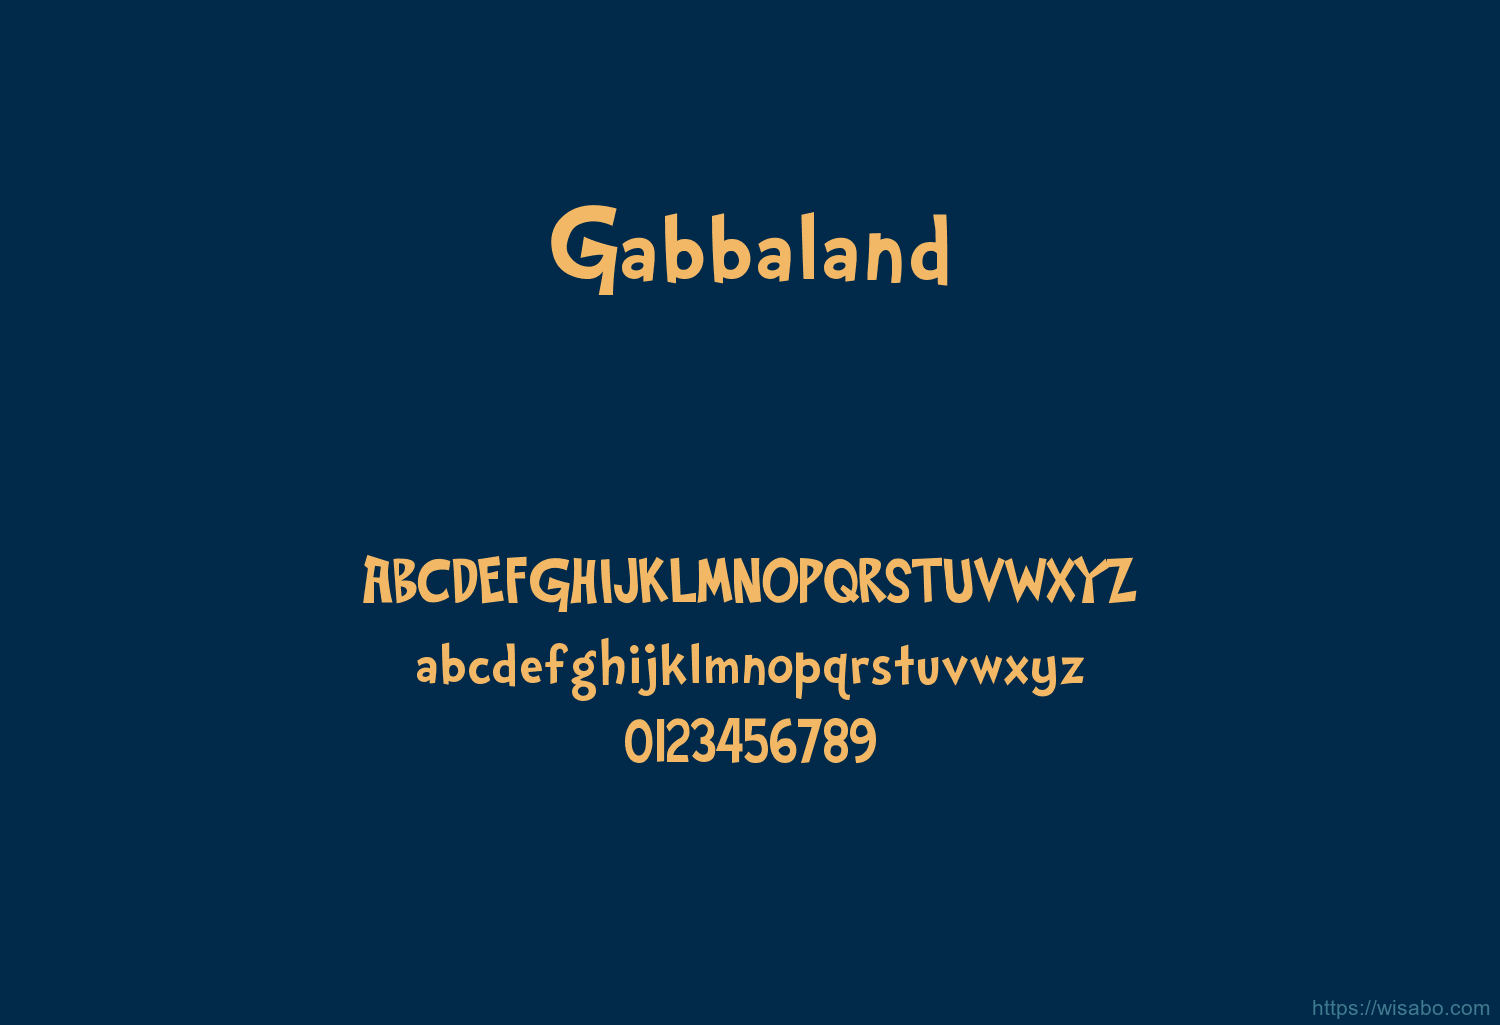 Gabbaland